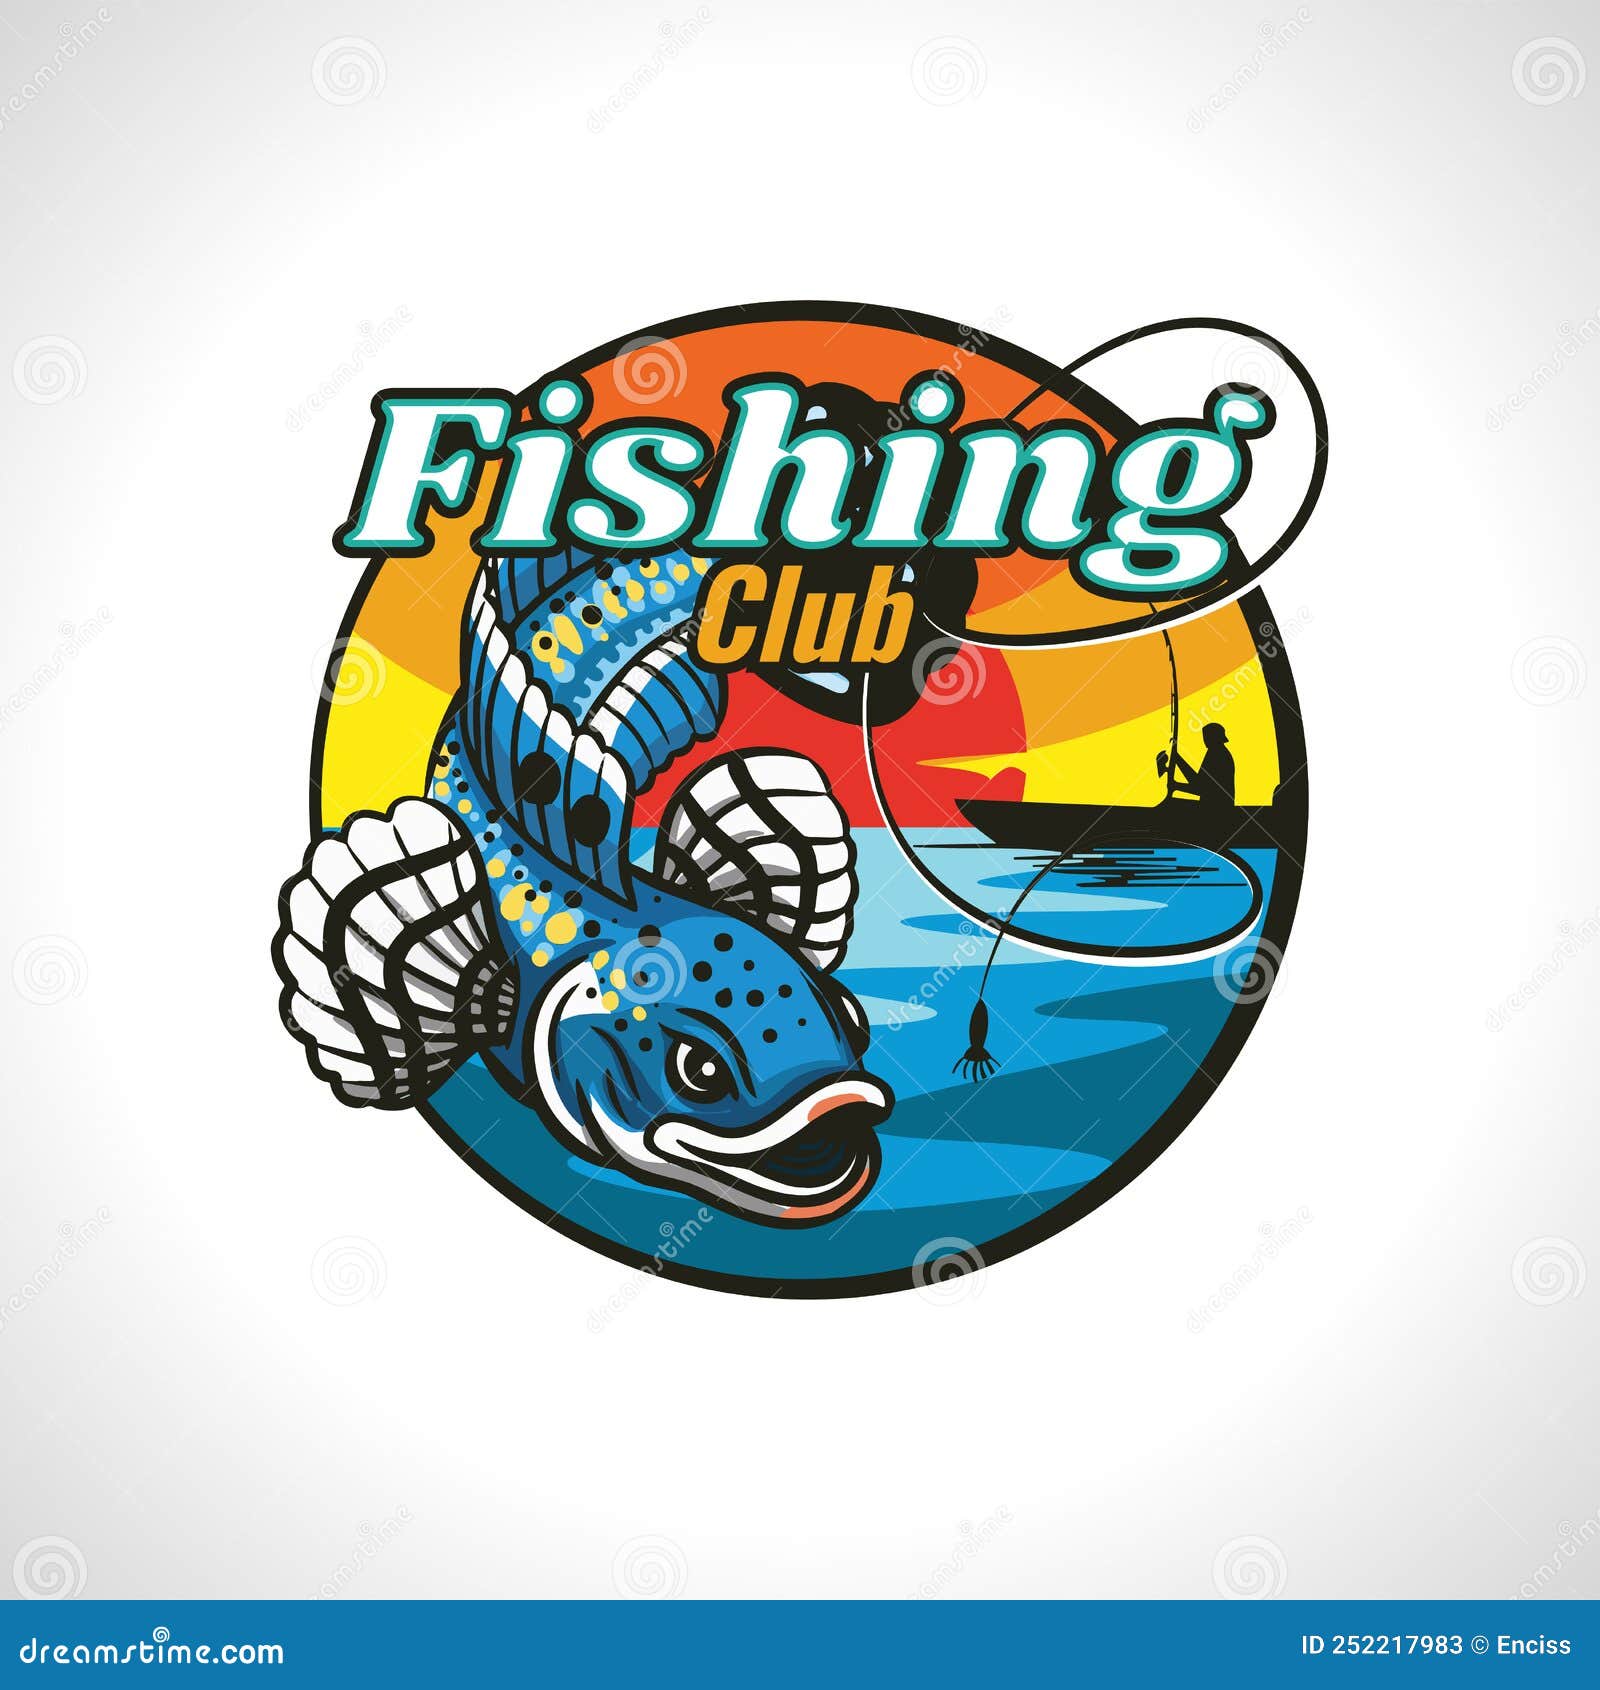 A Blue Fish Predator Fishing Club Illustration Stock Vector